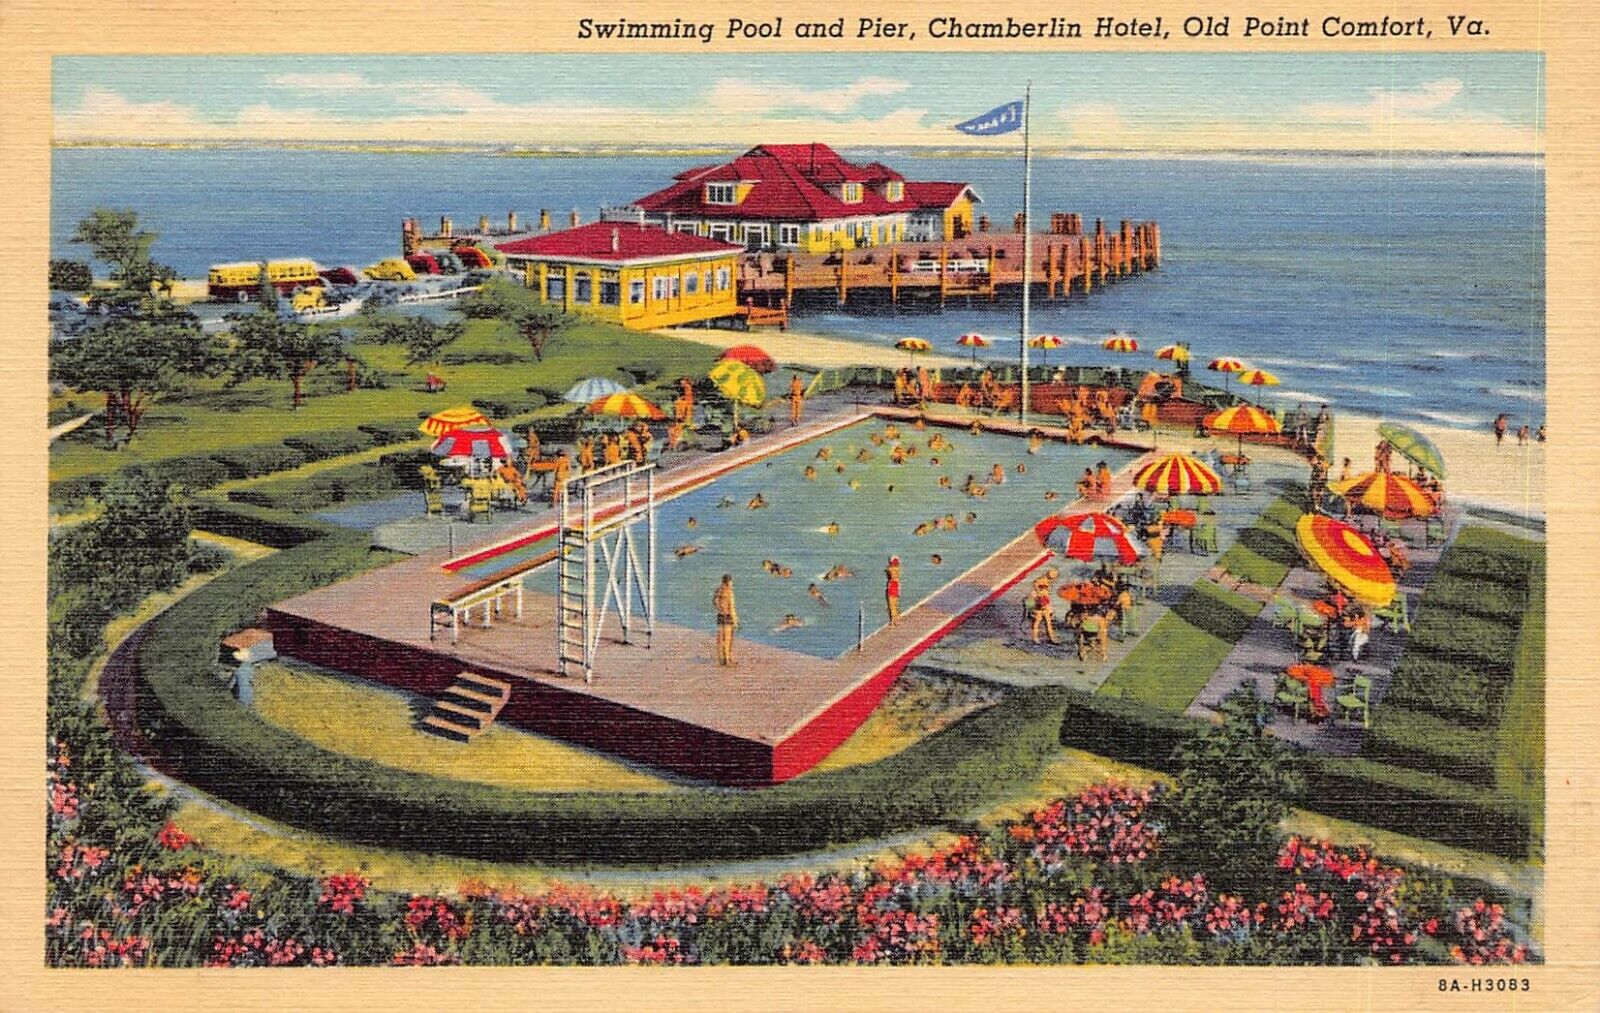 Old Point Comfort Virginia VA Chamberlin Hotel Swimming Pool Pier Linen Postcard